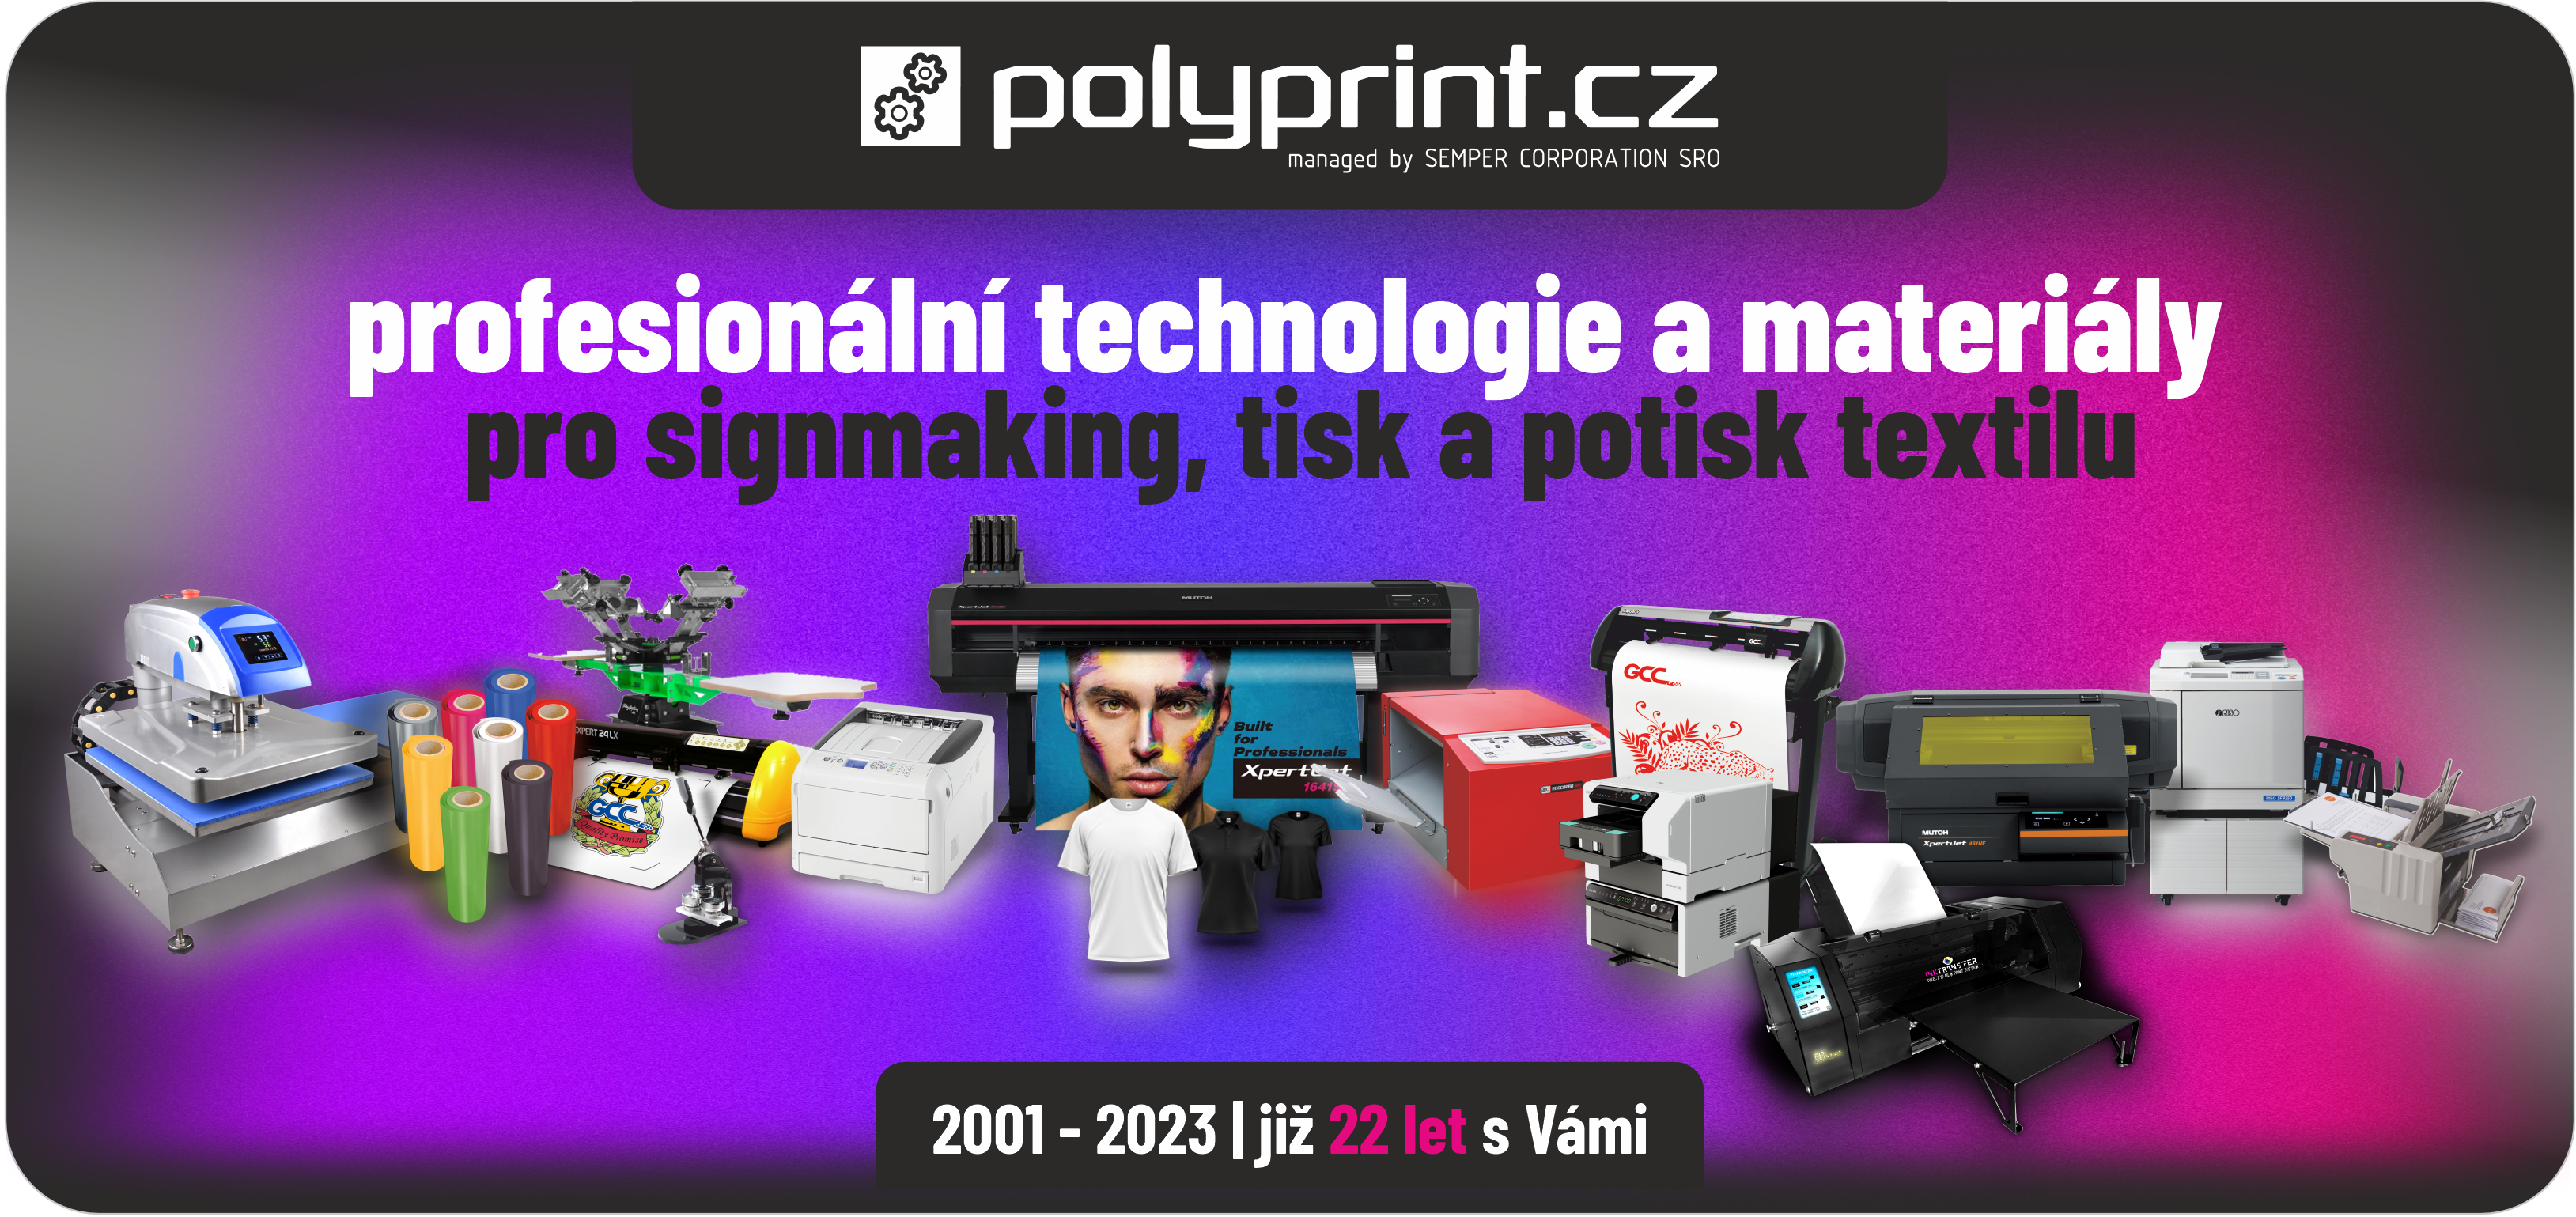 www.polyprint.cz | SEMPER CORPORATION SRO